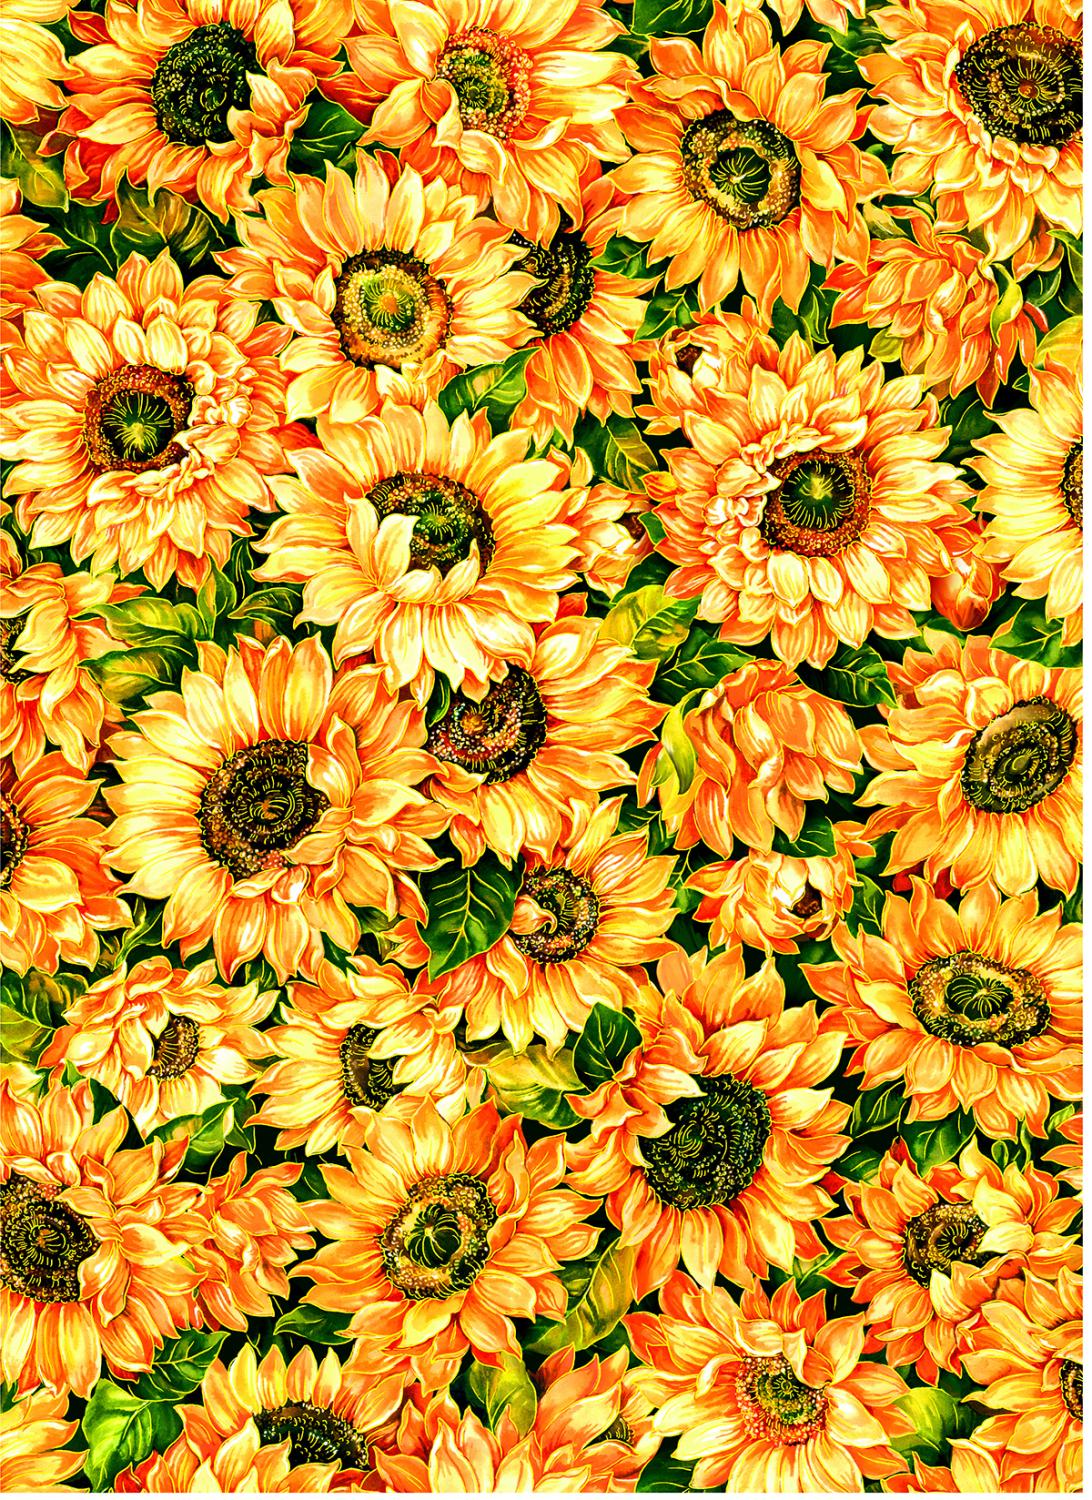 Sunflowers Gold -Change of Seasons